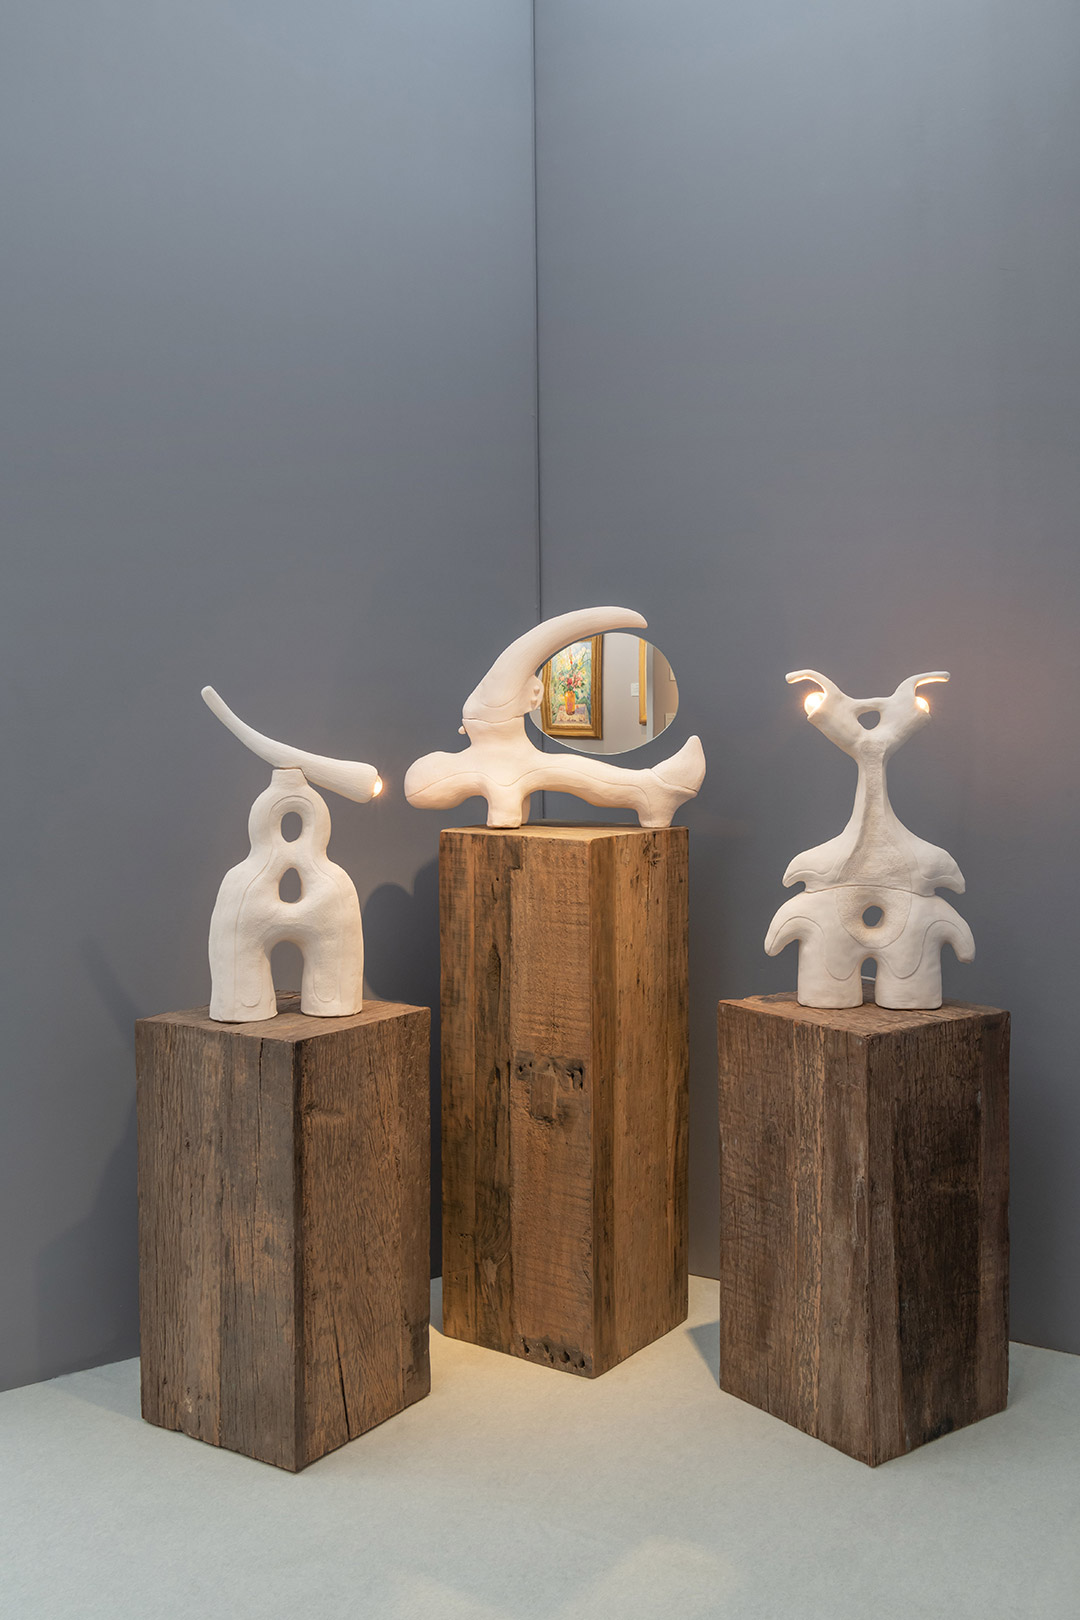 Jan Ernst’s Flux sculptures at PAN Amsterdam